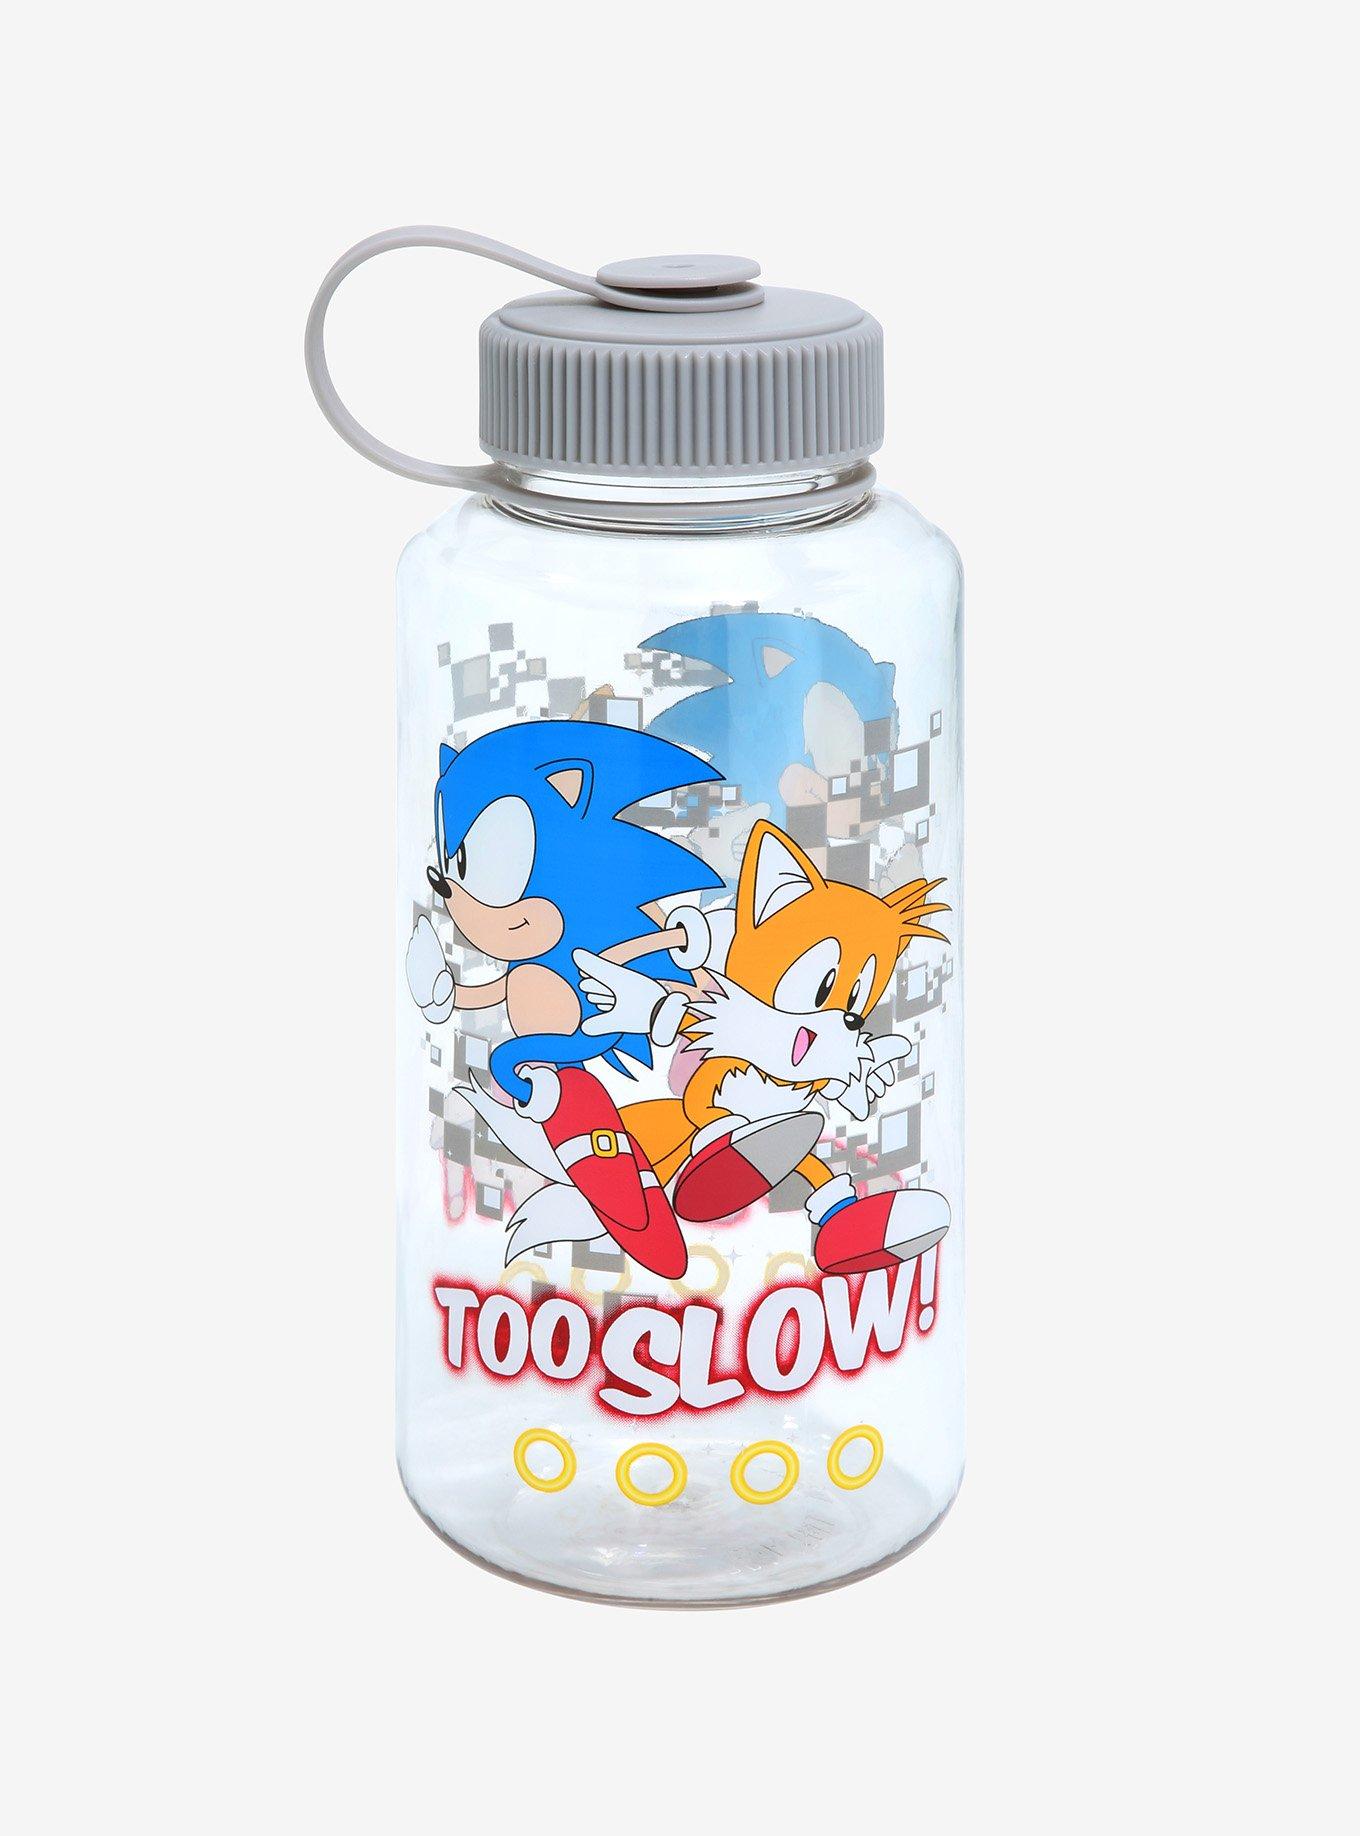 Sonic The Hedgehog Too Slow Water Bottle